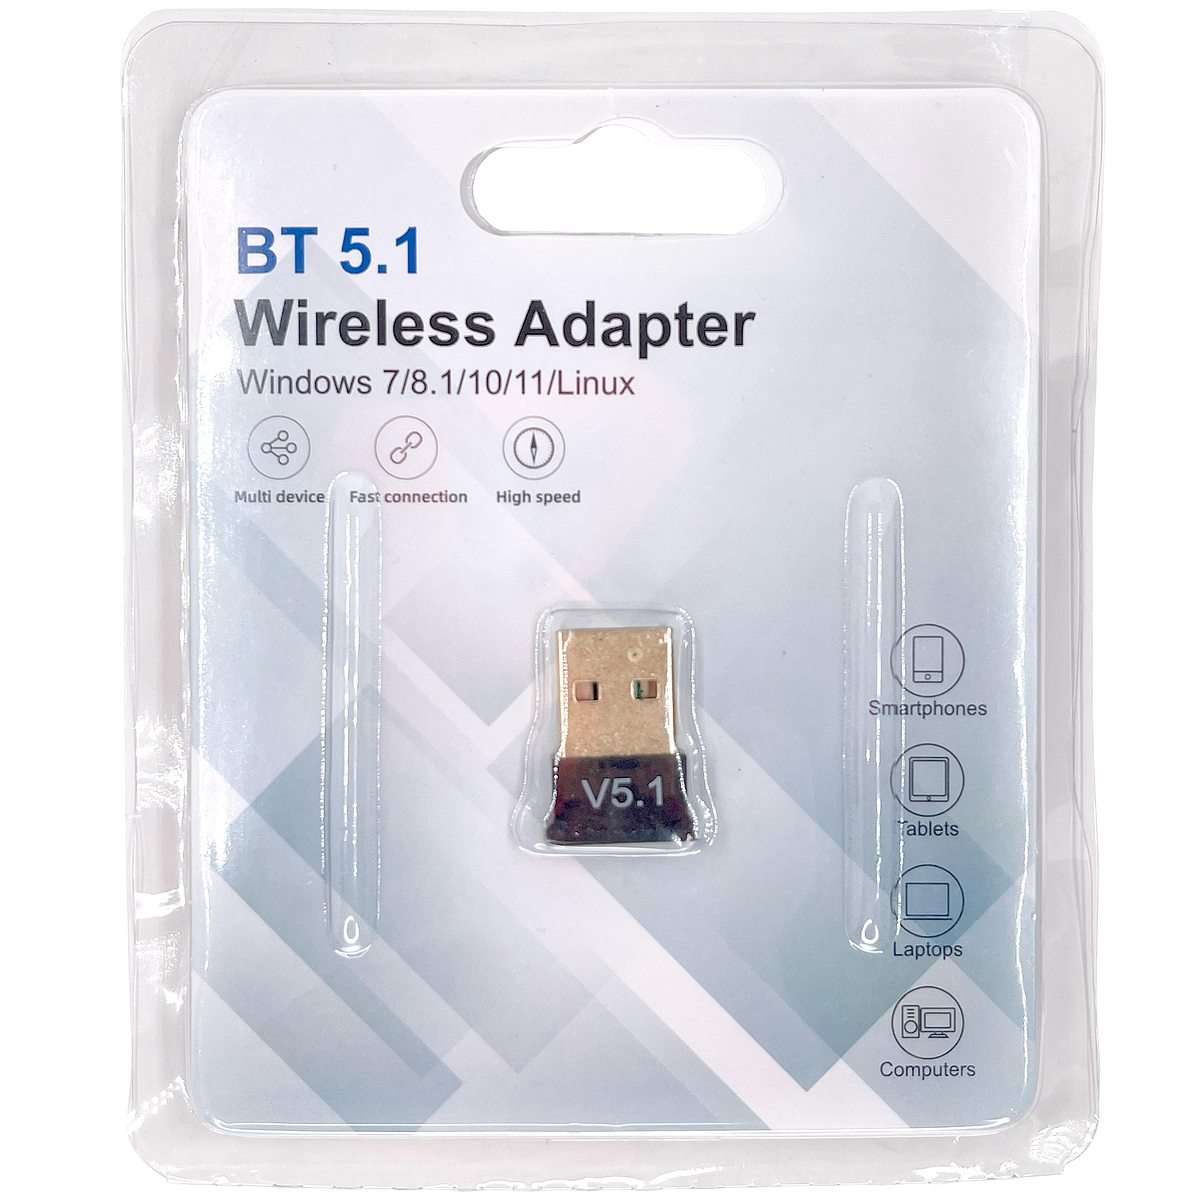 Transmisor Receptor Bluetooth 5.0 USB